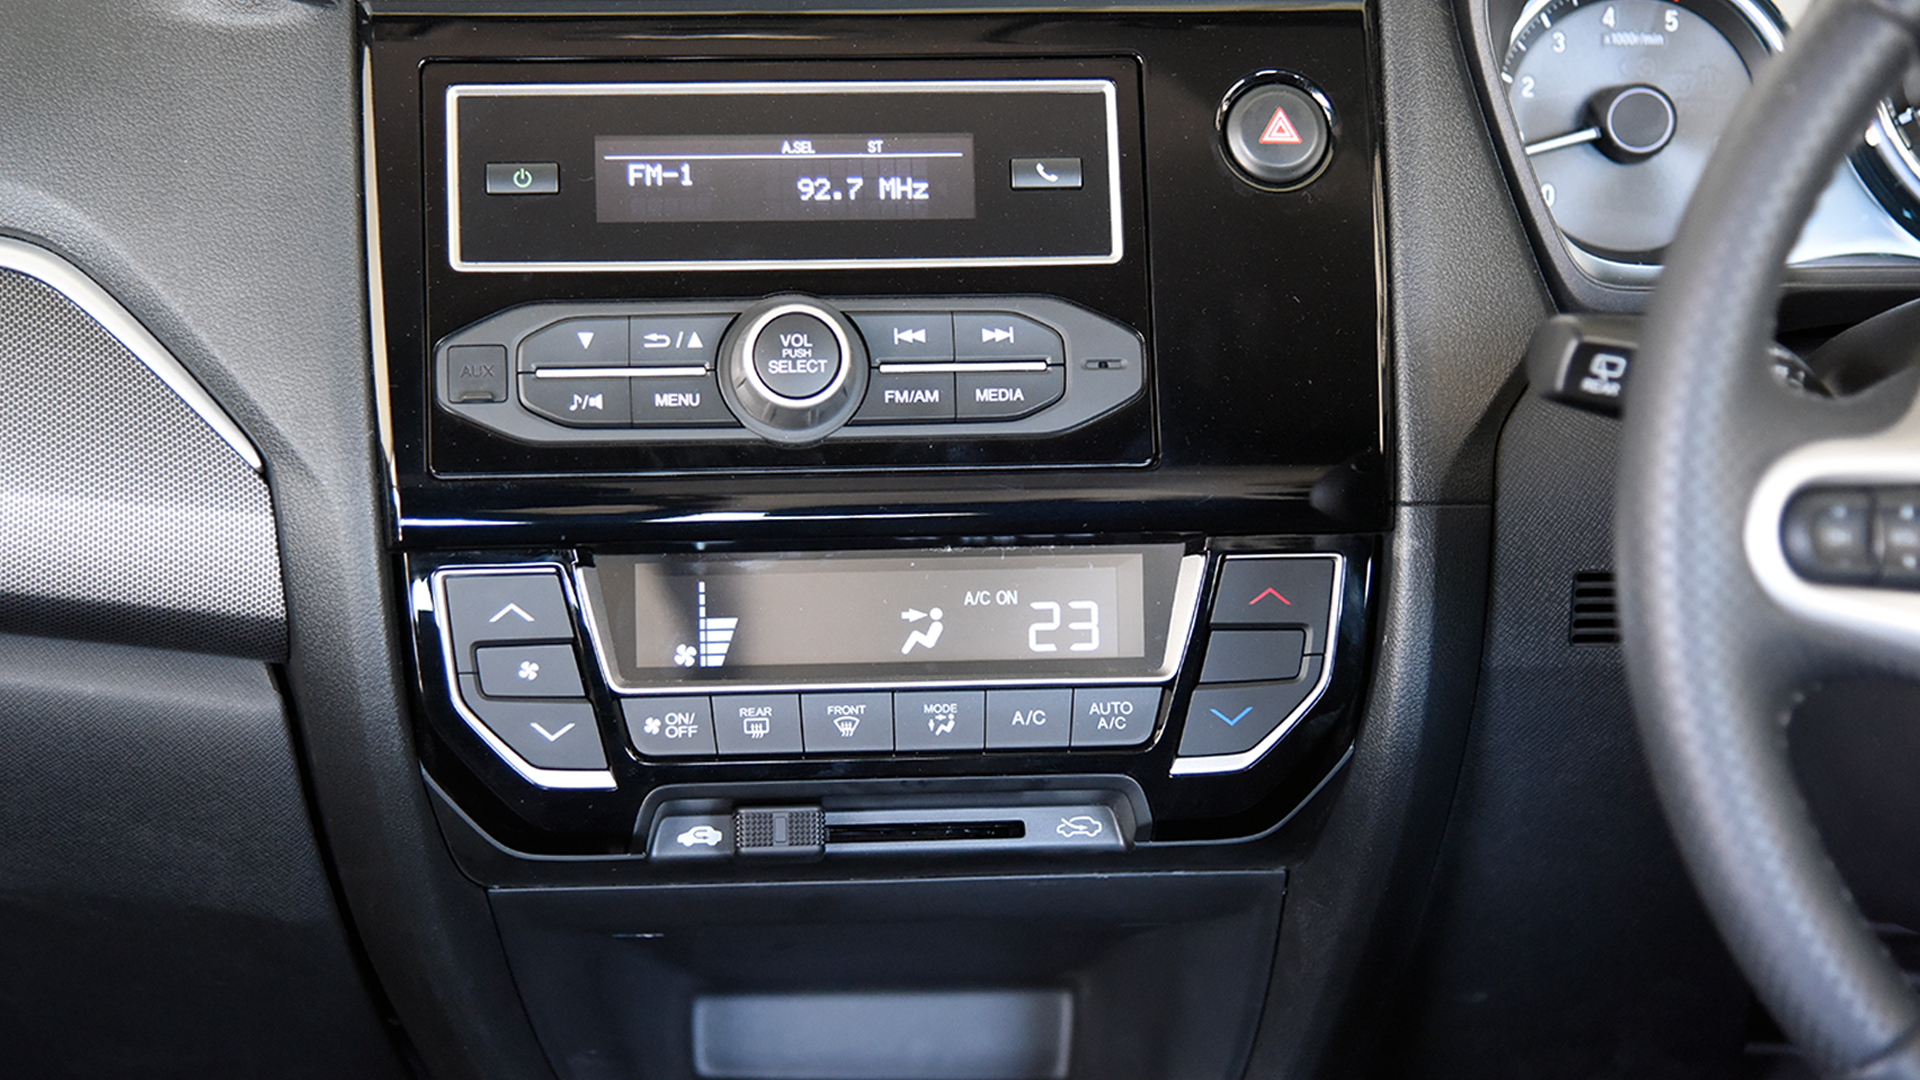 Honda BRV 2016 VX Petrol Interior Car Photos - Overdrive